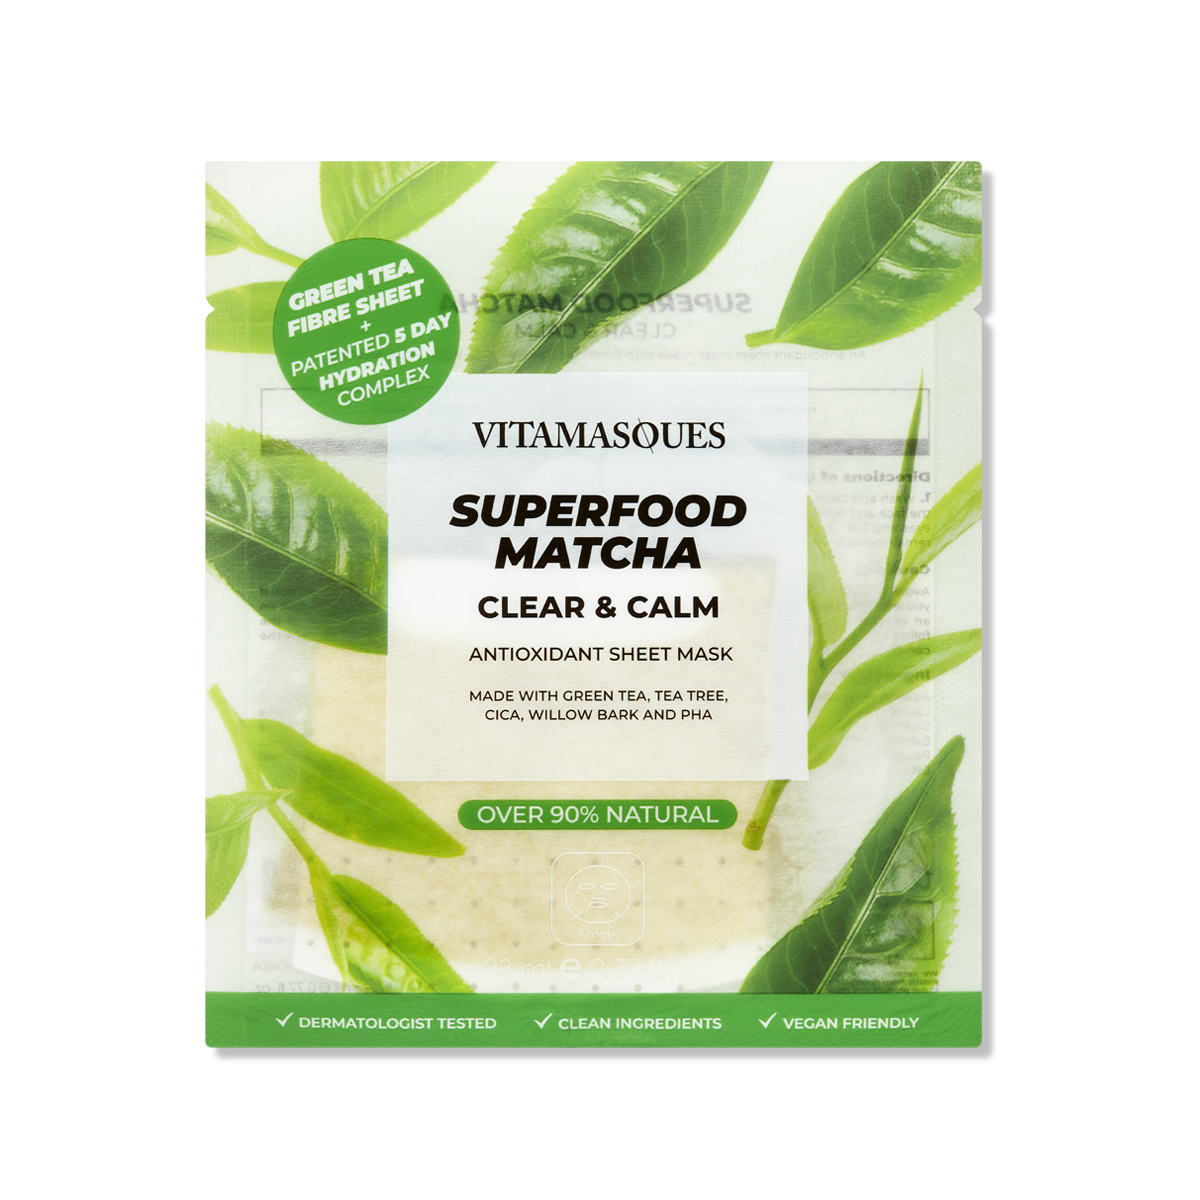 Superfood Matcha Clear & Calm Antioxidant Sheet Mask